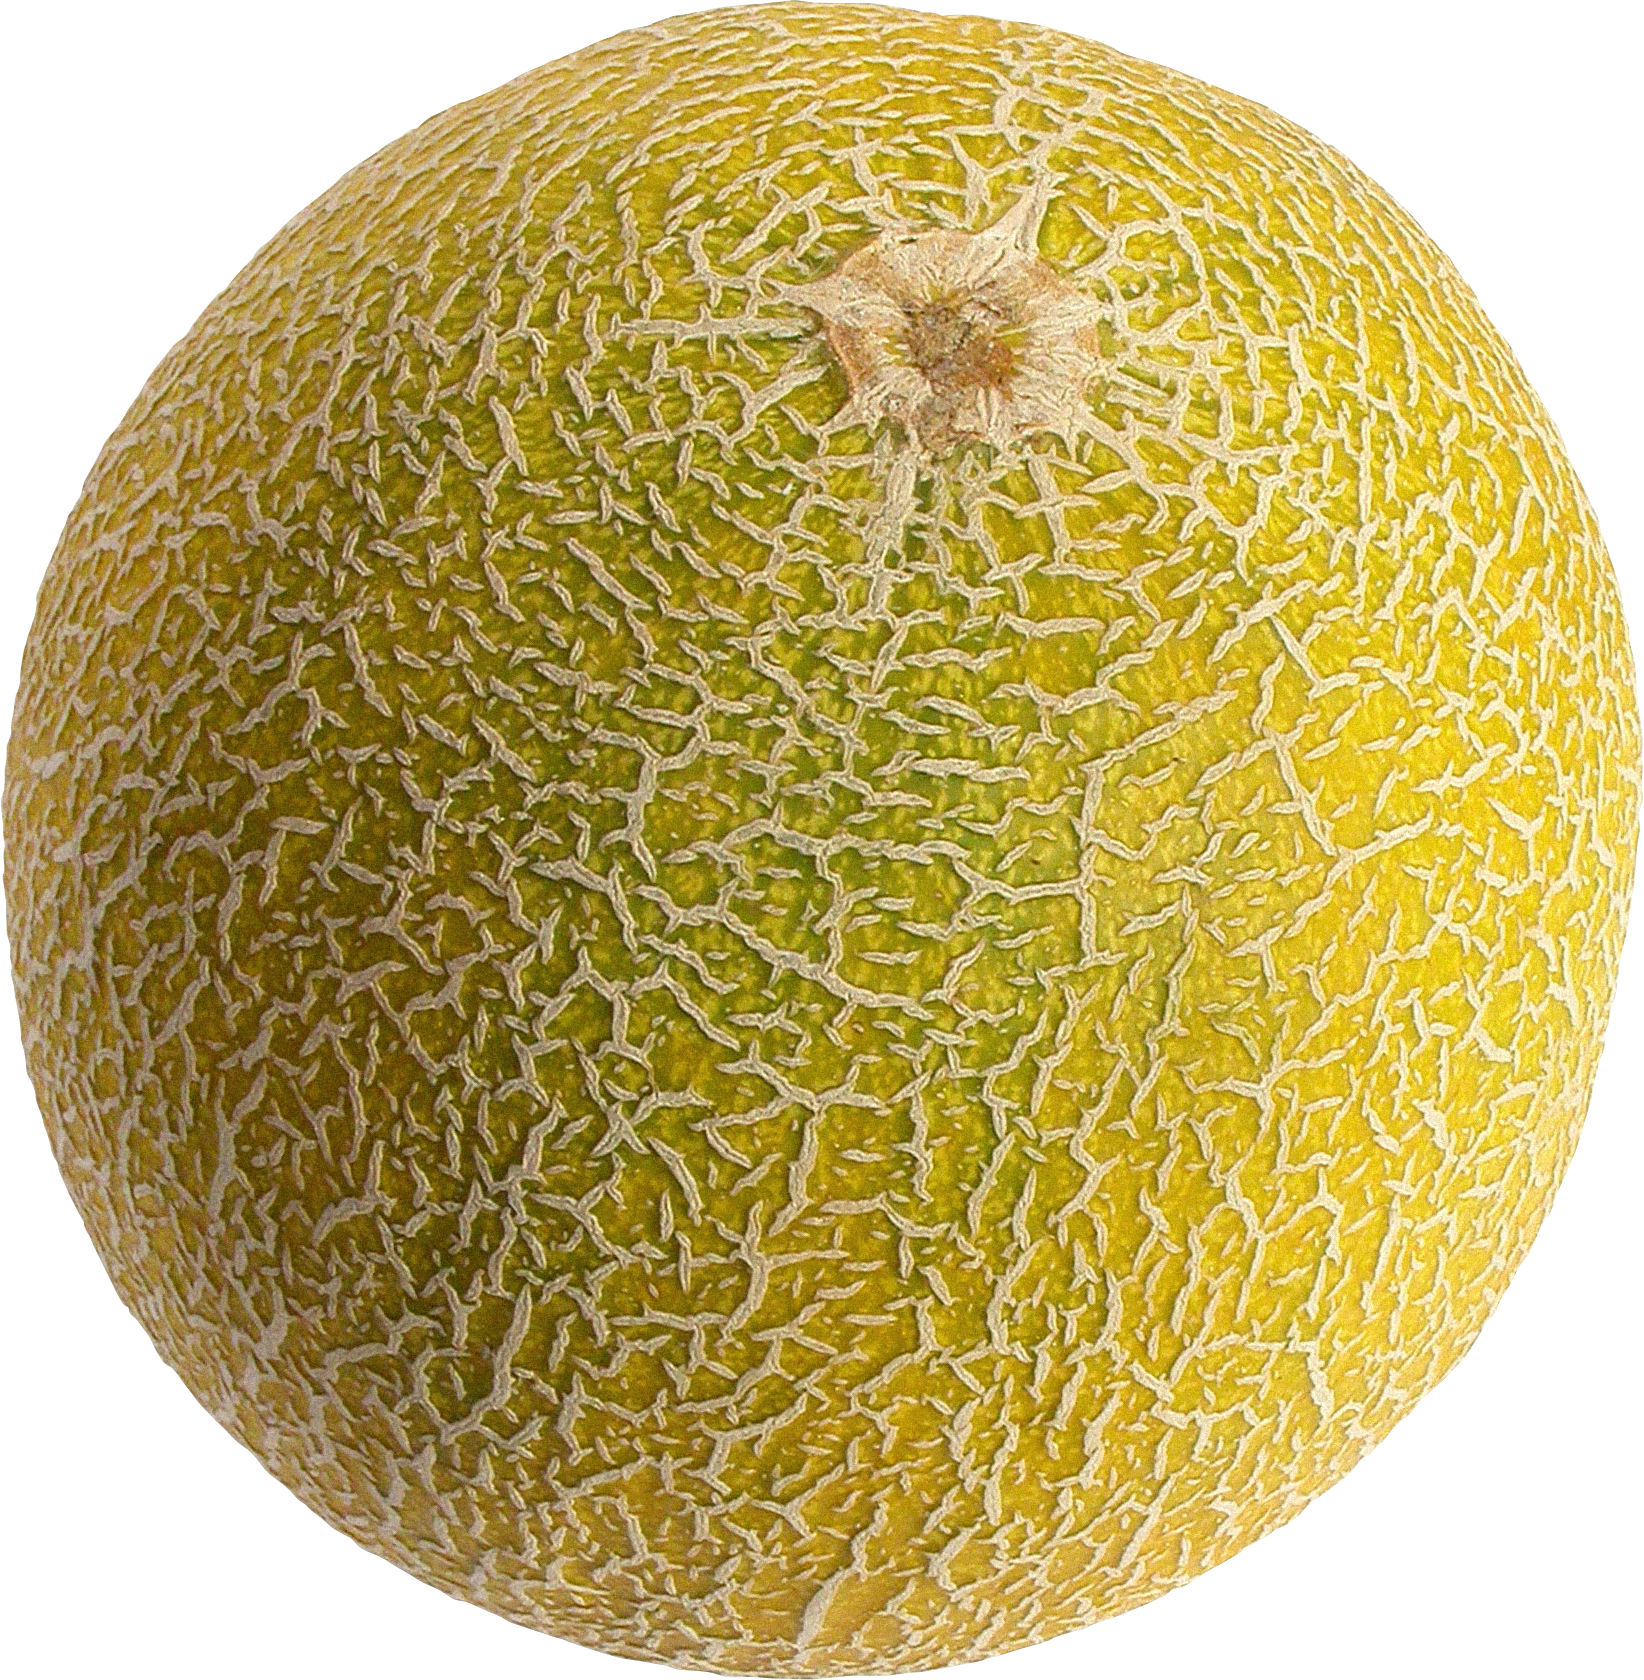 Fresh Cantaloupe Free Download Image PNG Image